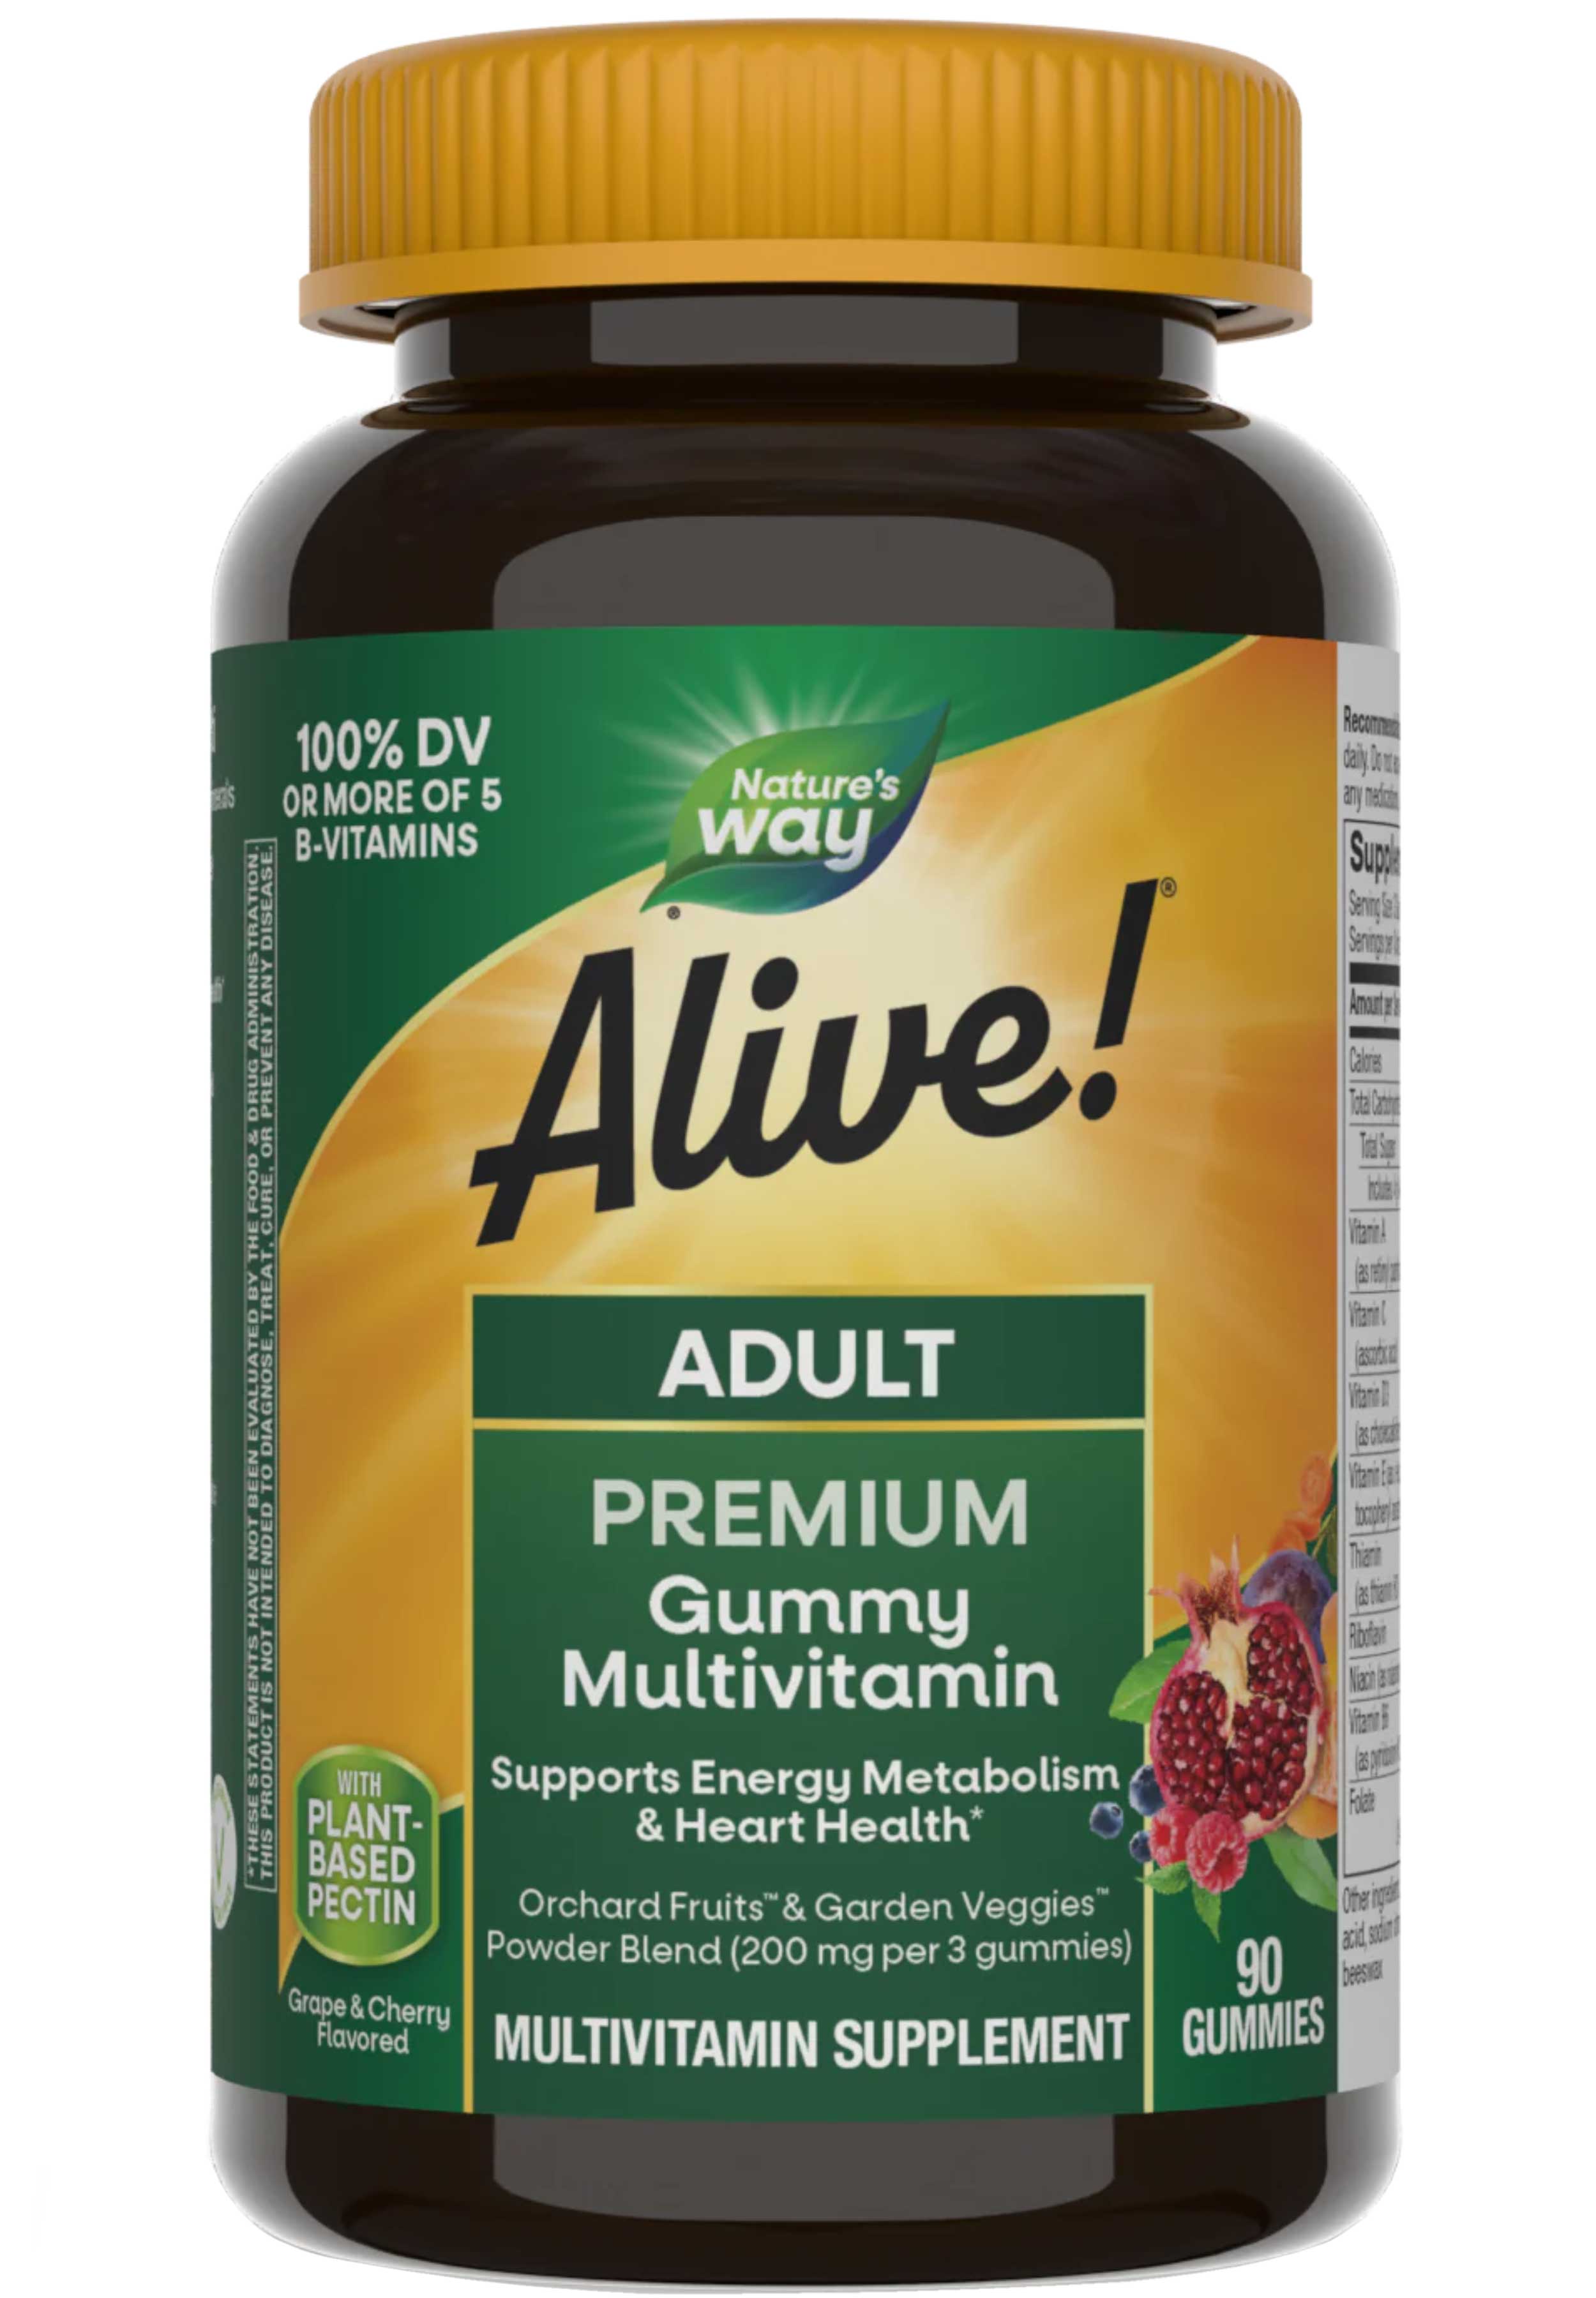 Nature's Way Alive! Adult Premium Gummies Multivitamin